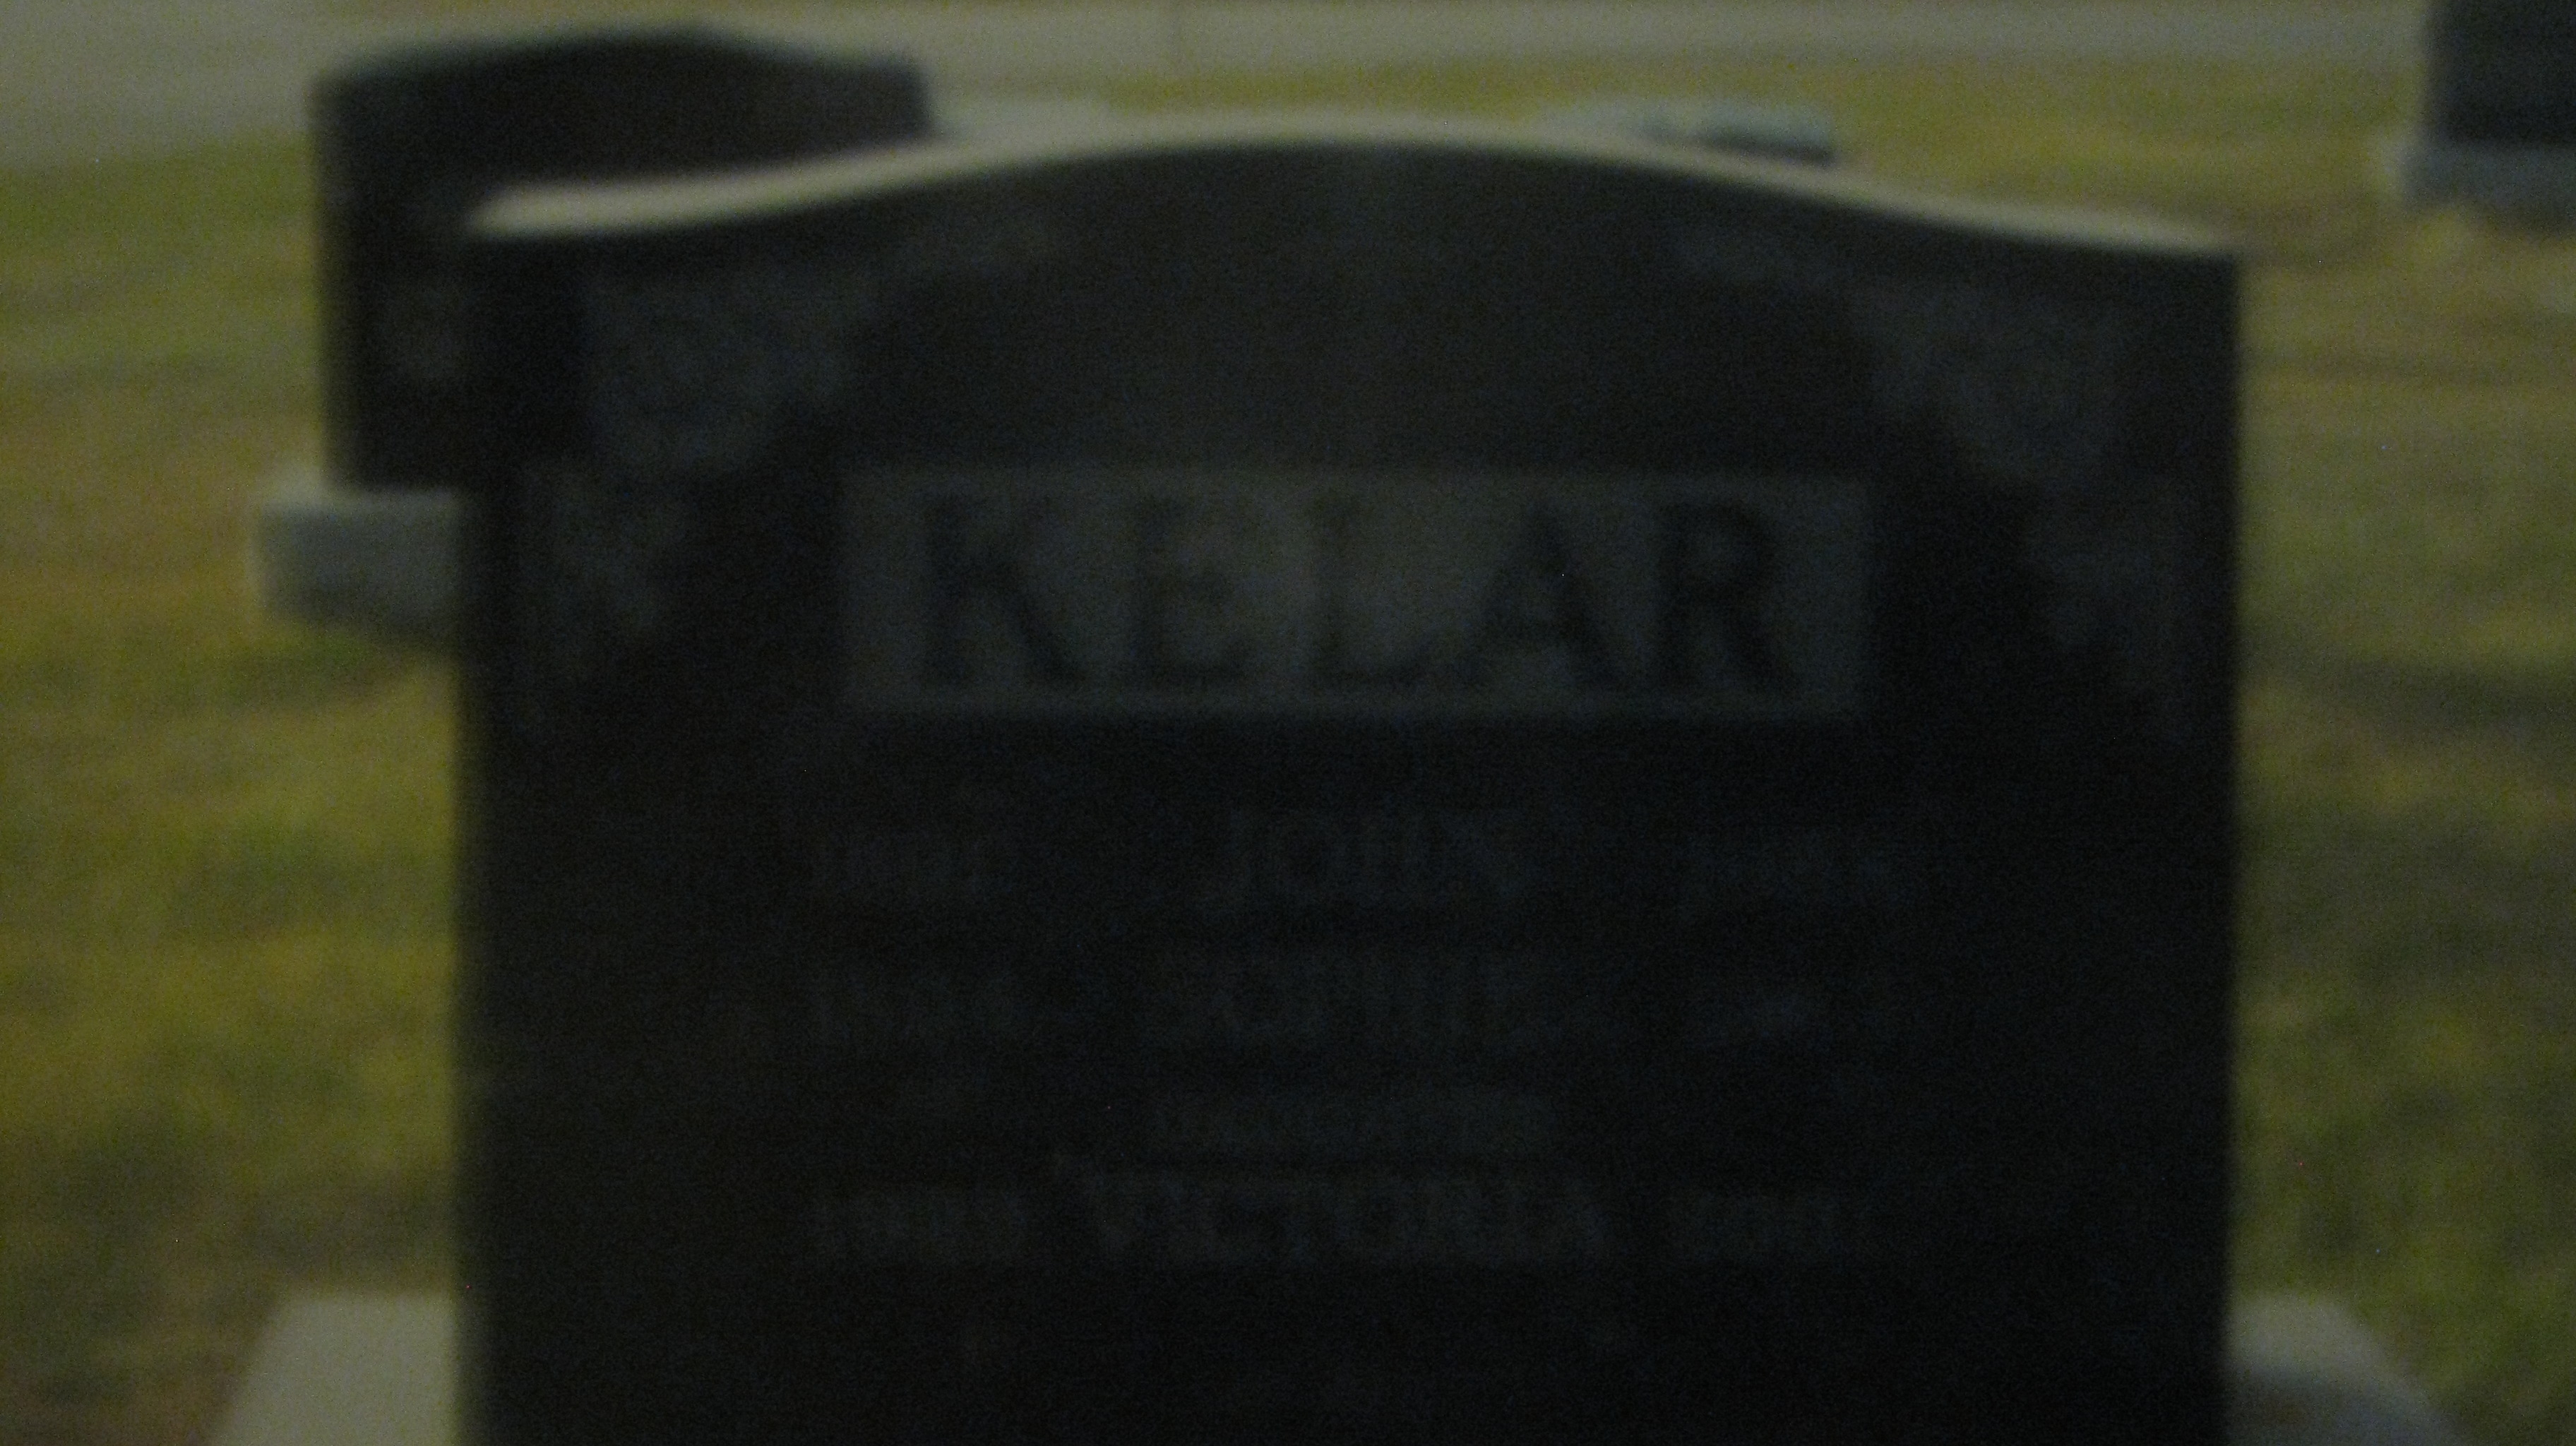 Kelar Family headstone